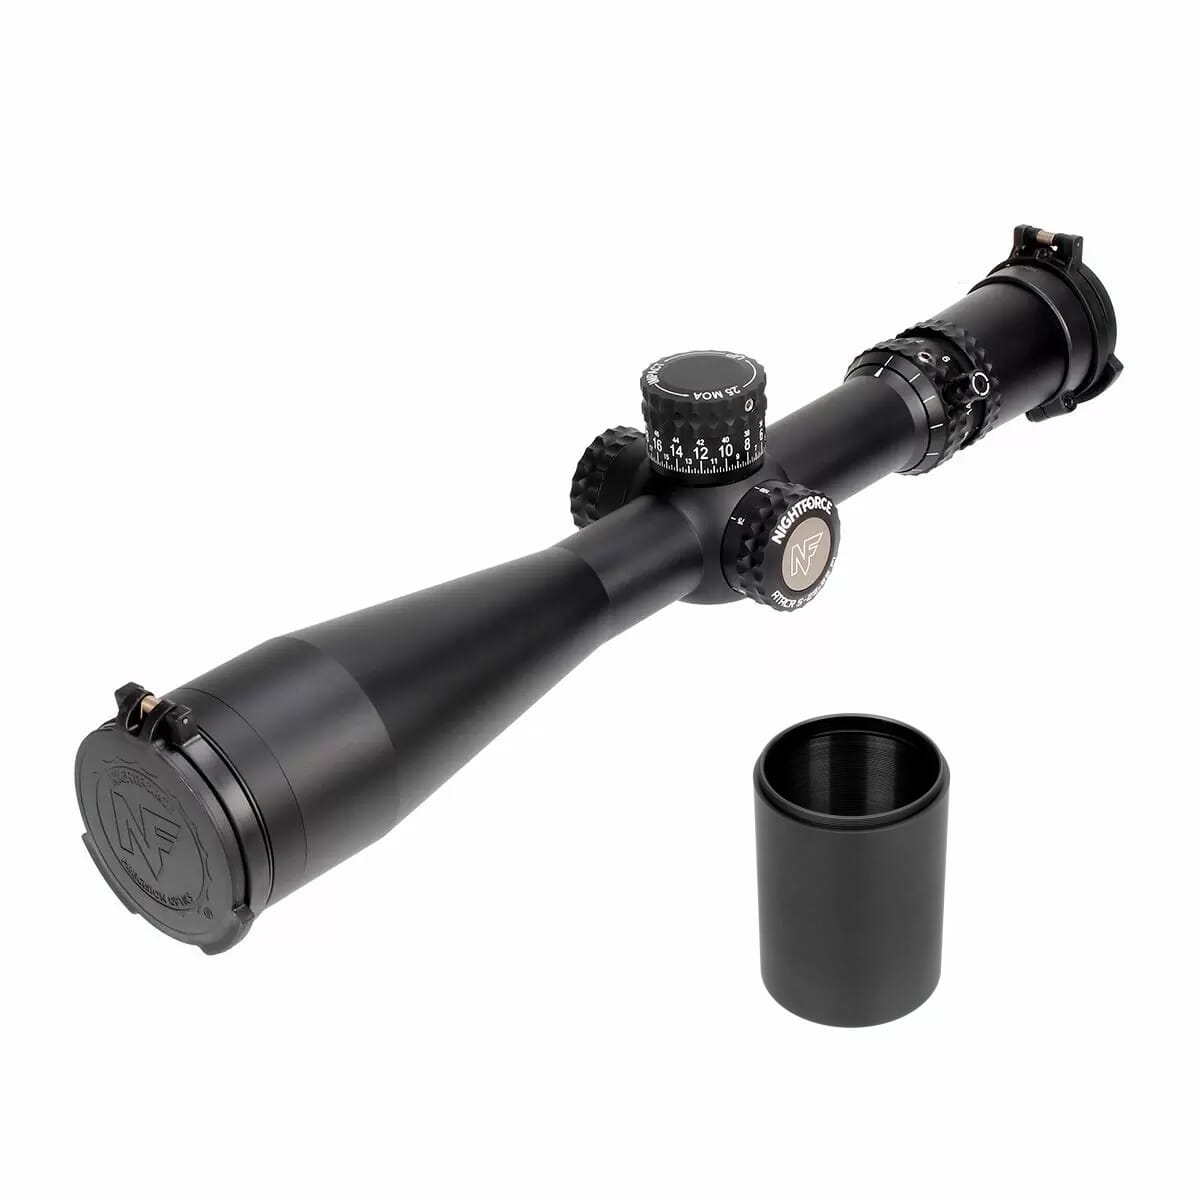 Nightforce ATACR 5-25x56mm F1 ZS .25 MOA Illum PTL MOA-XT Black Riflescope w/Flip Up Covers/Sunshade C648